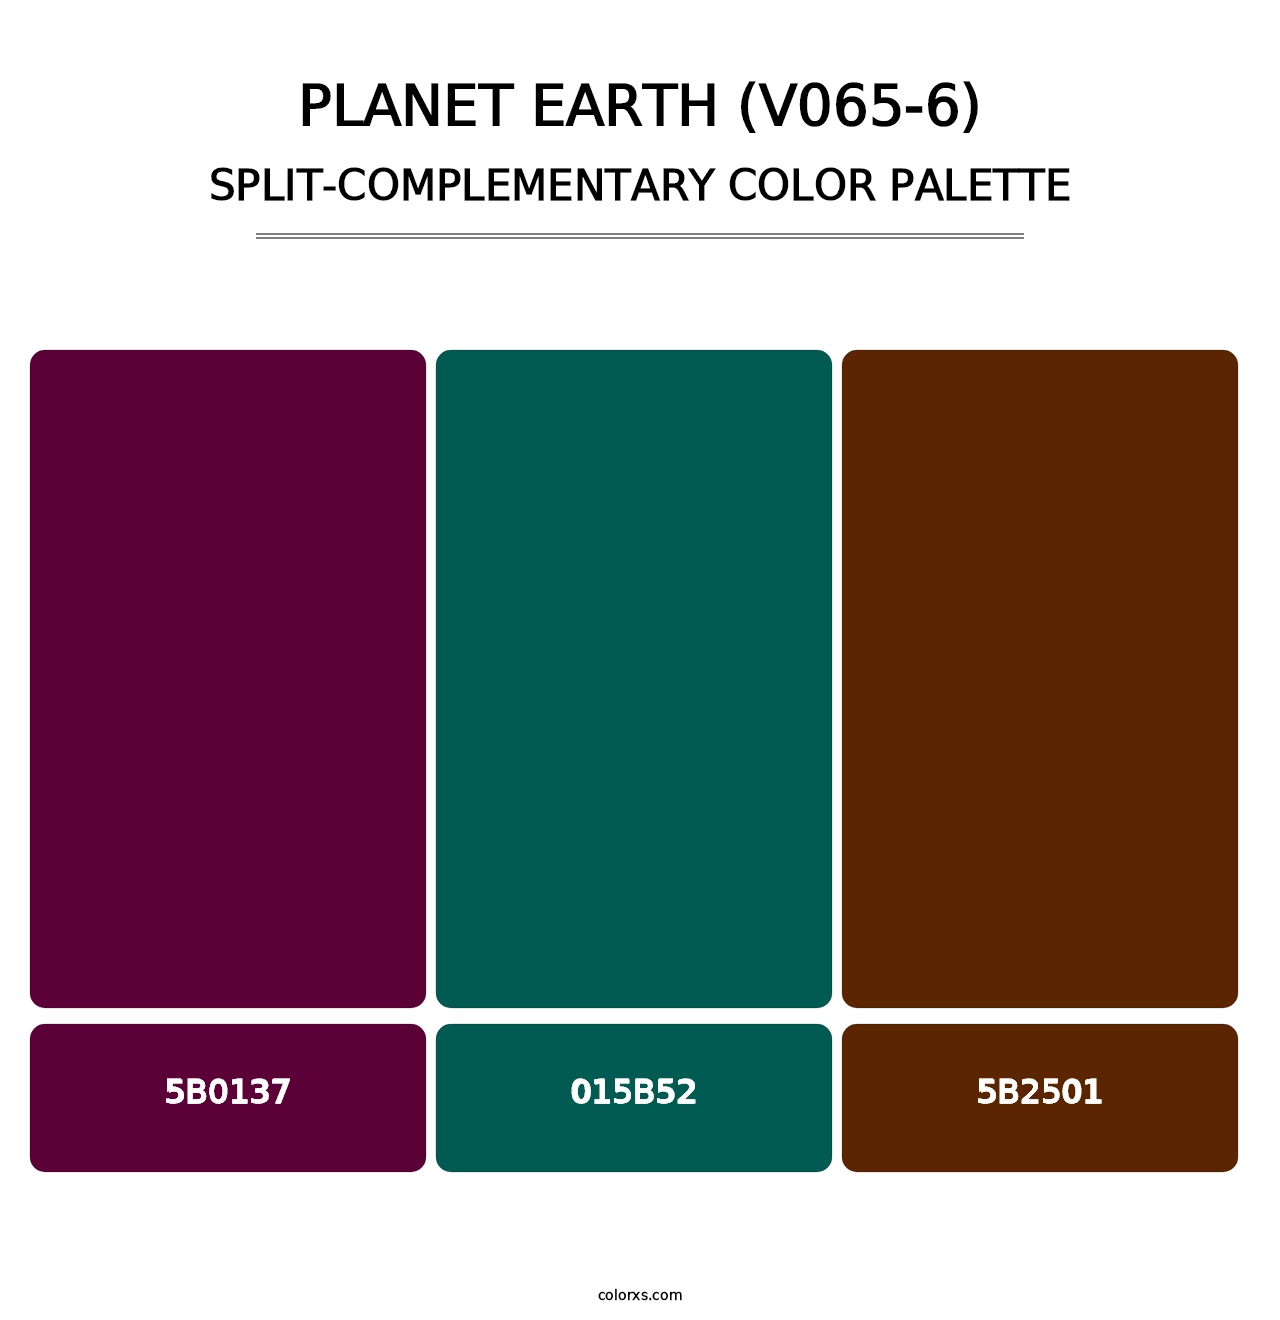 Planet Earth (V065-6) - Split-Complementary Color Palette